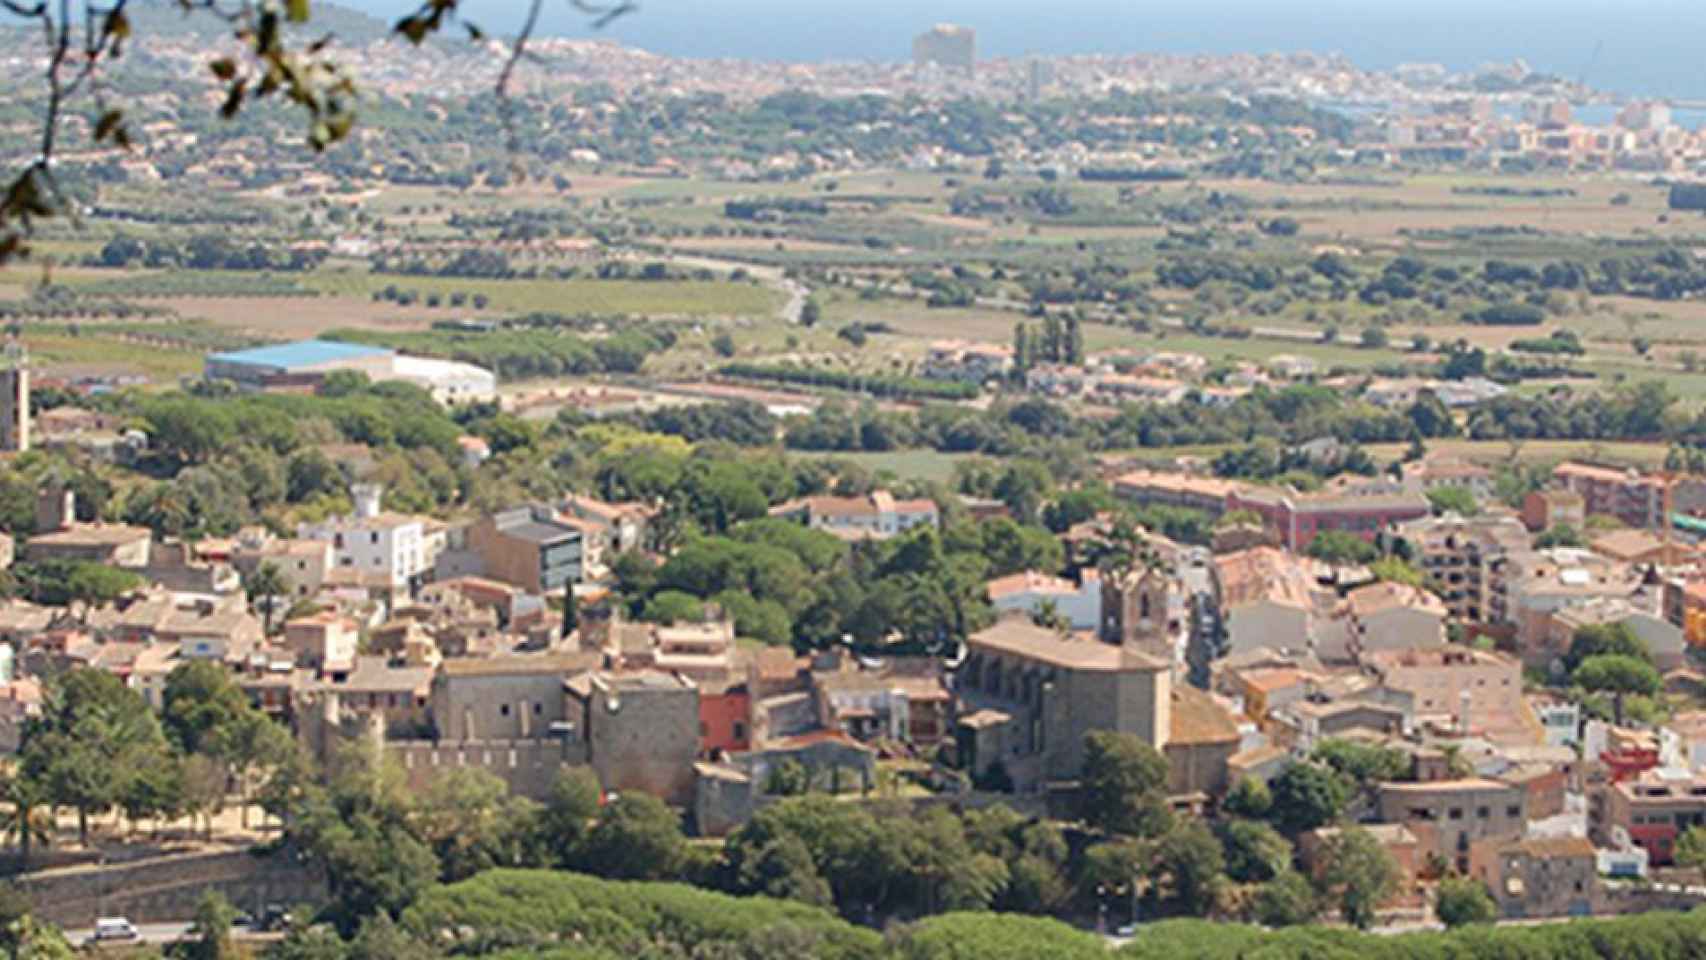 Imagen de la localidad de Calonge i Sant Antoni / CG